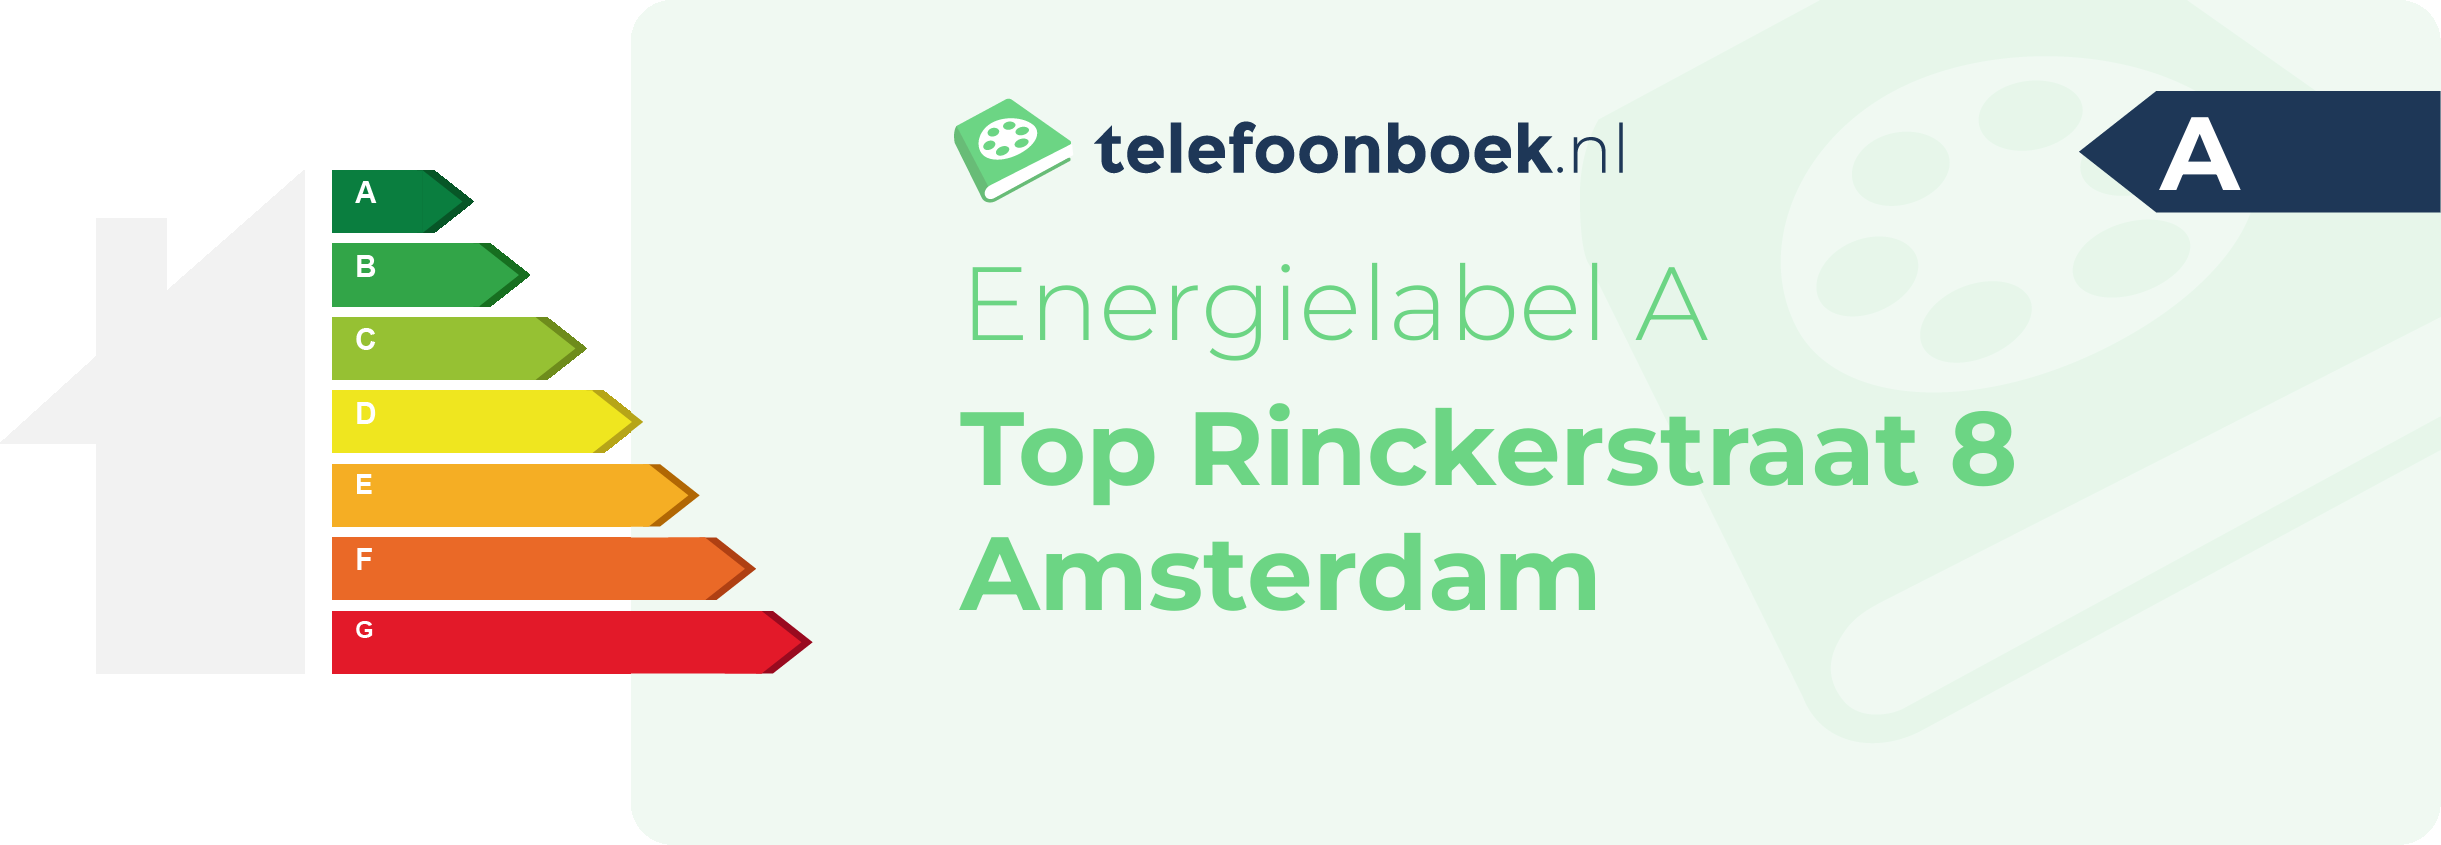 Energielabel Top Rinckerstraat 8 Amsterdam